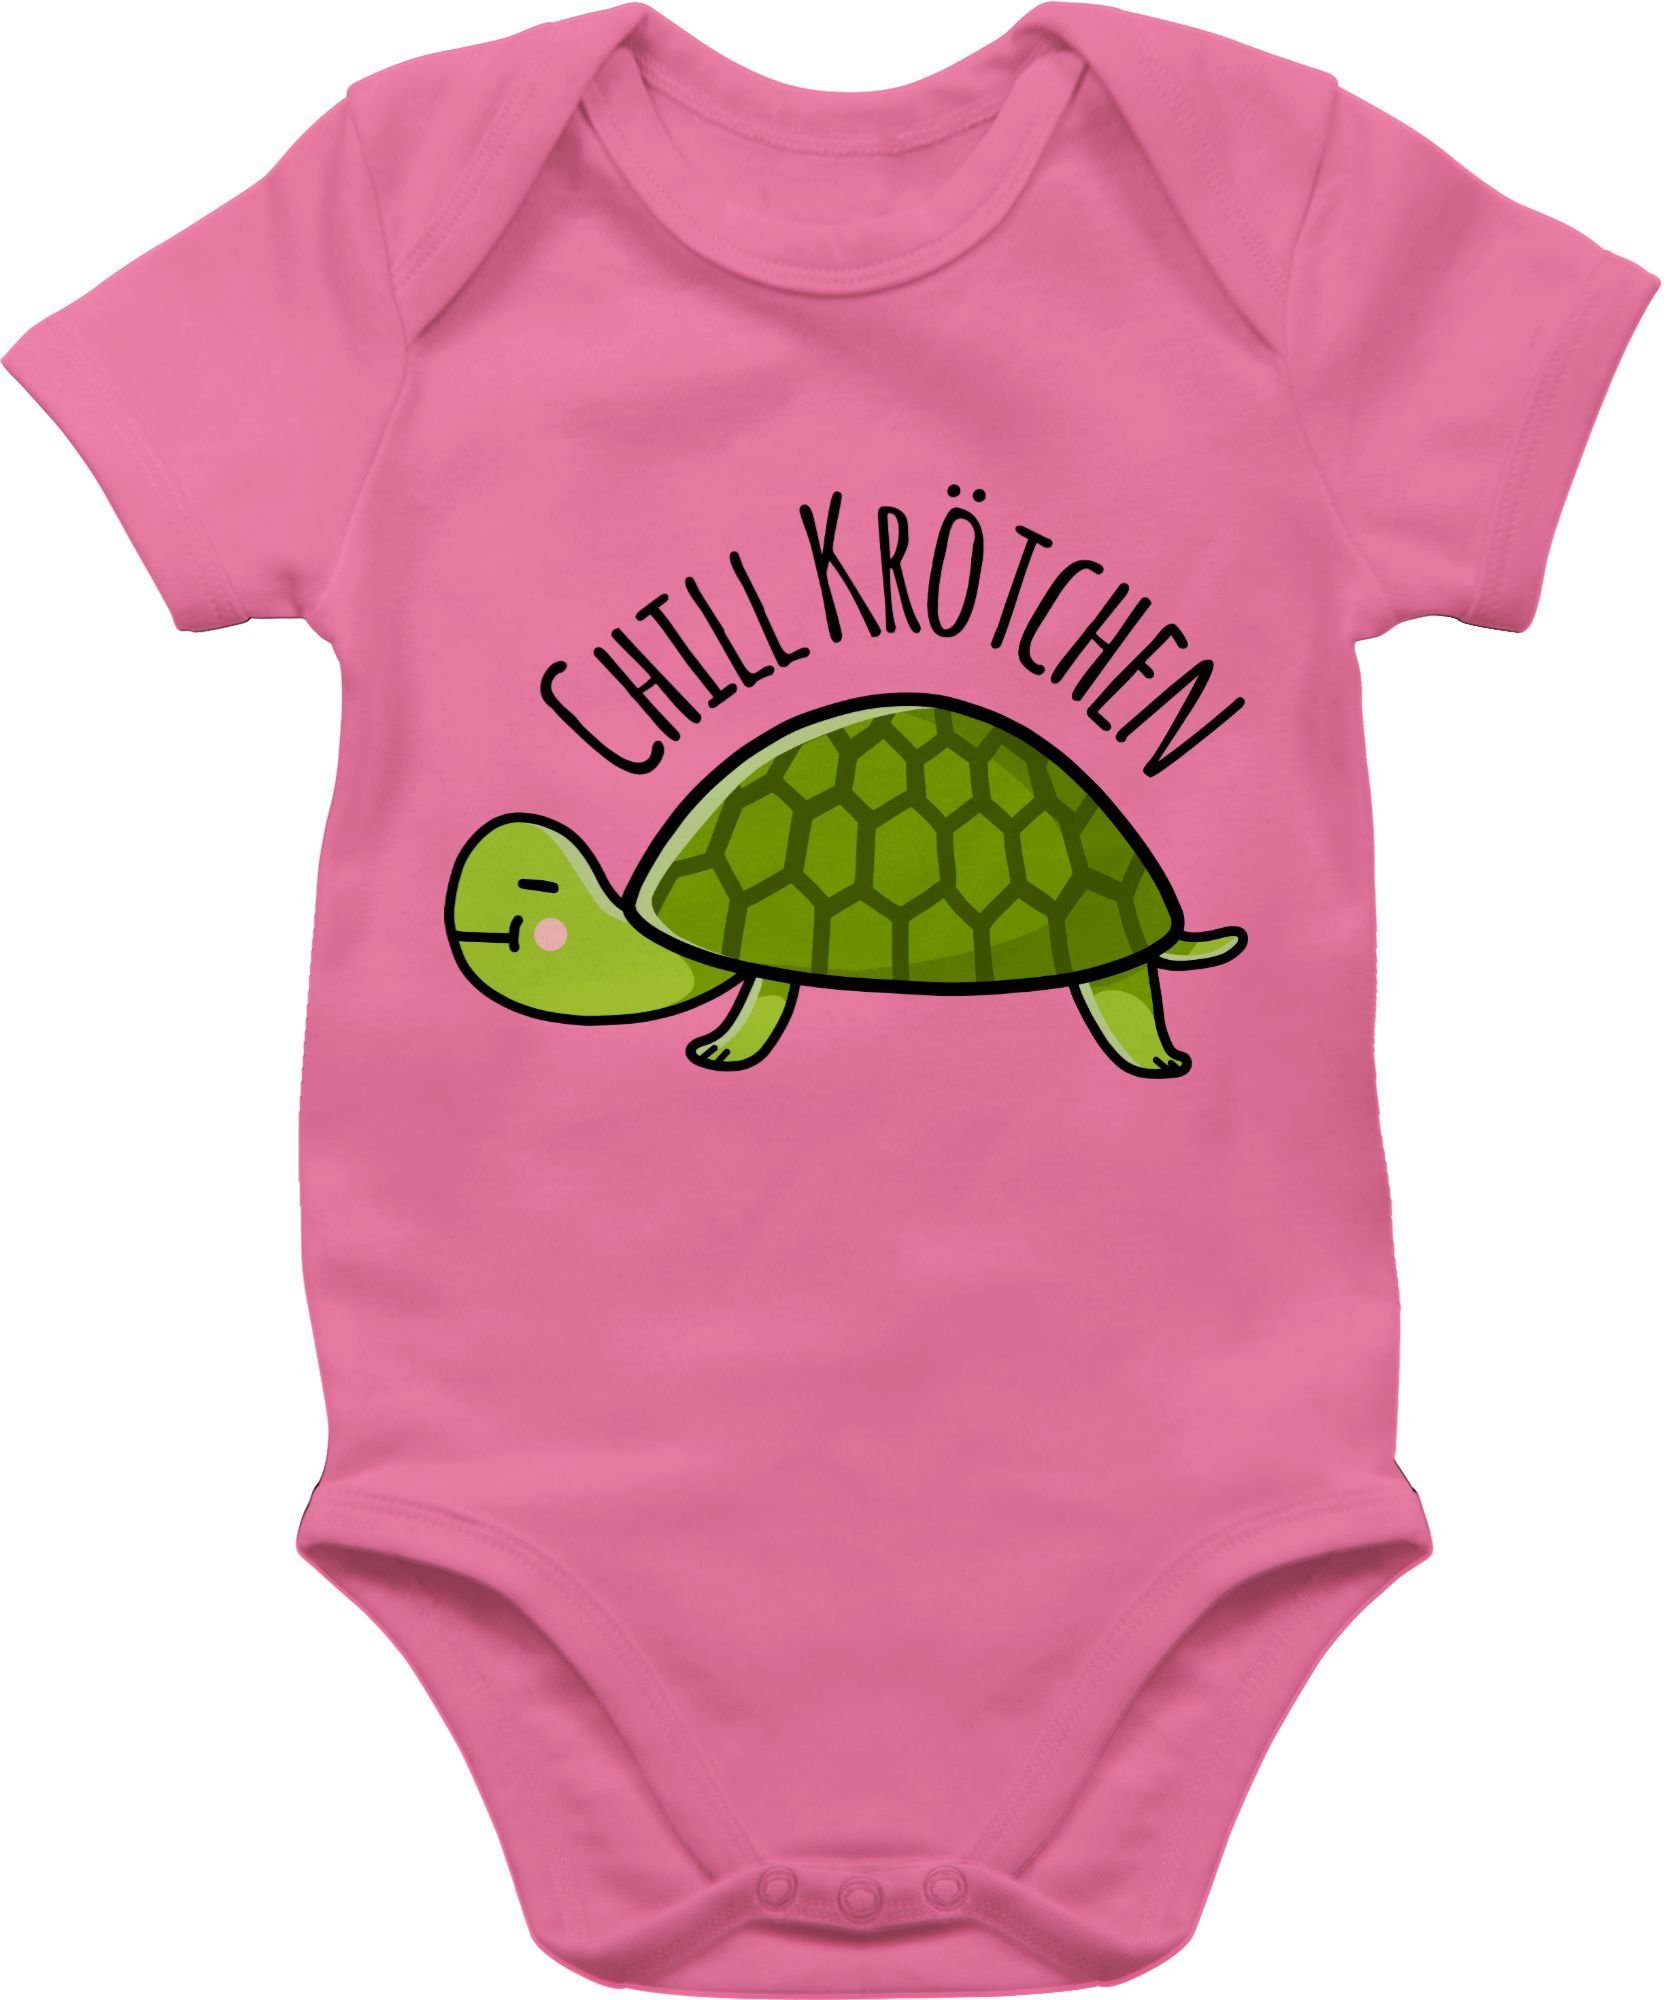 Shirtracer Shirtbody Chill Krötchen Schildkröte Tiermotiv Animal Print Baby 2 Pink